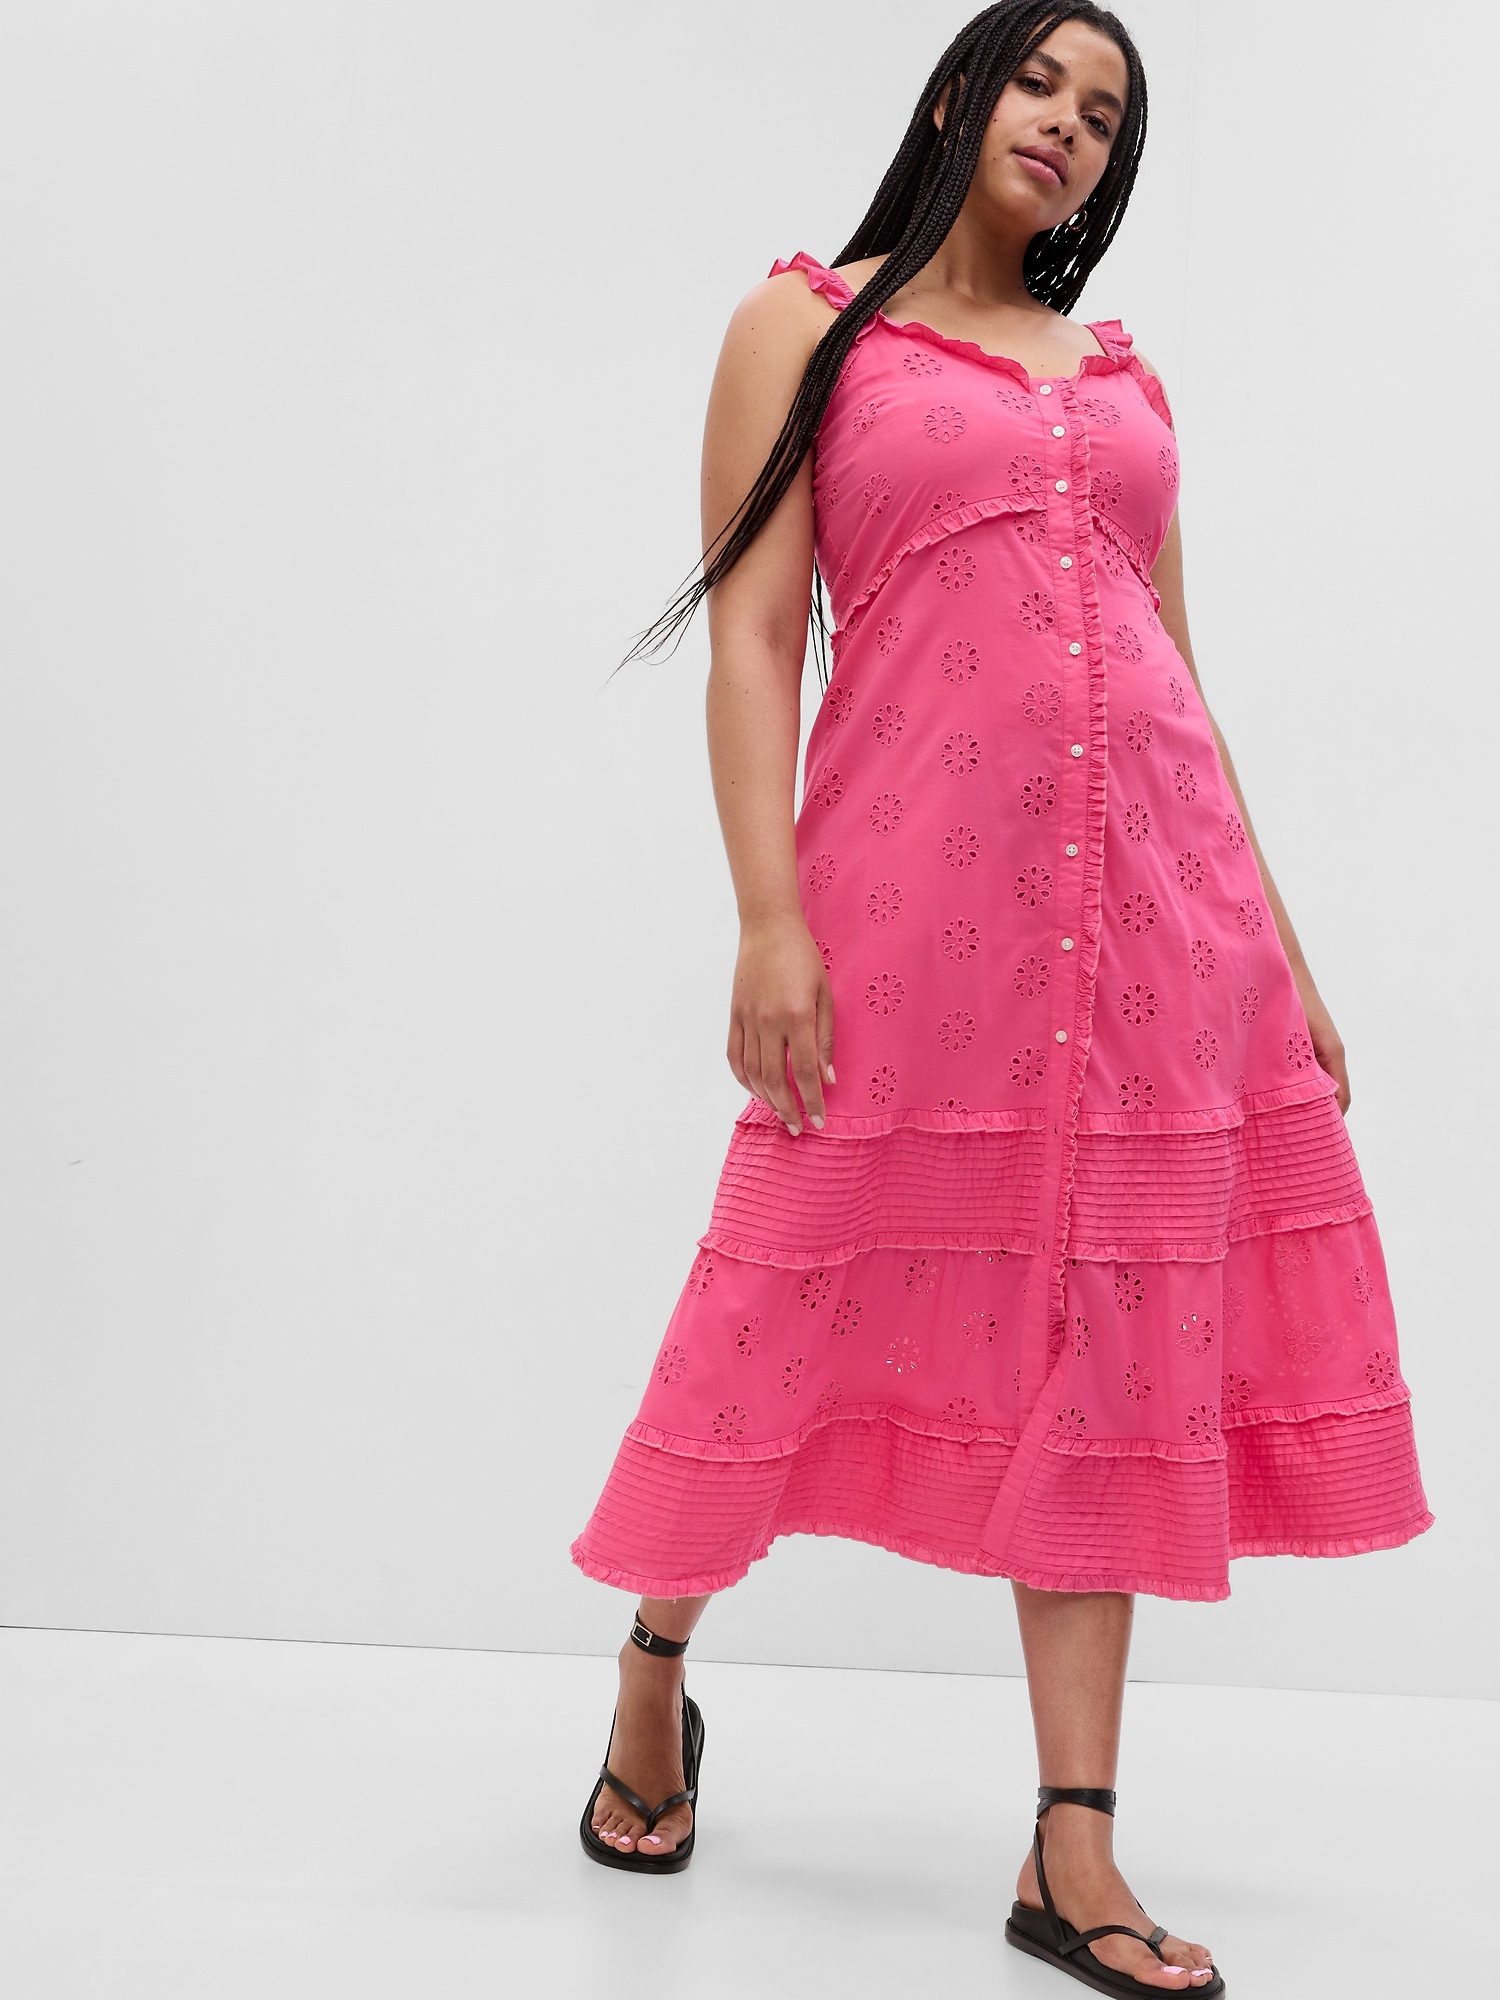  Dresses for Women - Ruffle Trim Slit Hem Pencil Dress